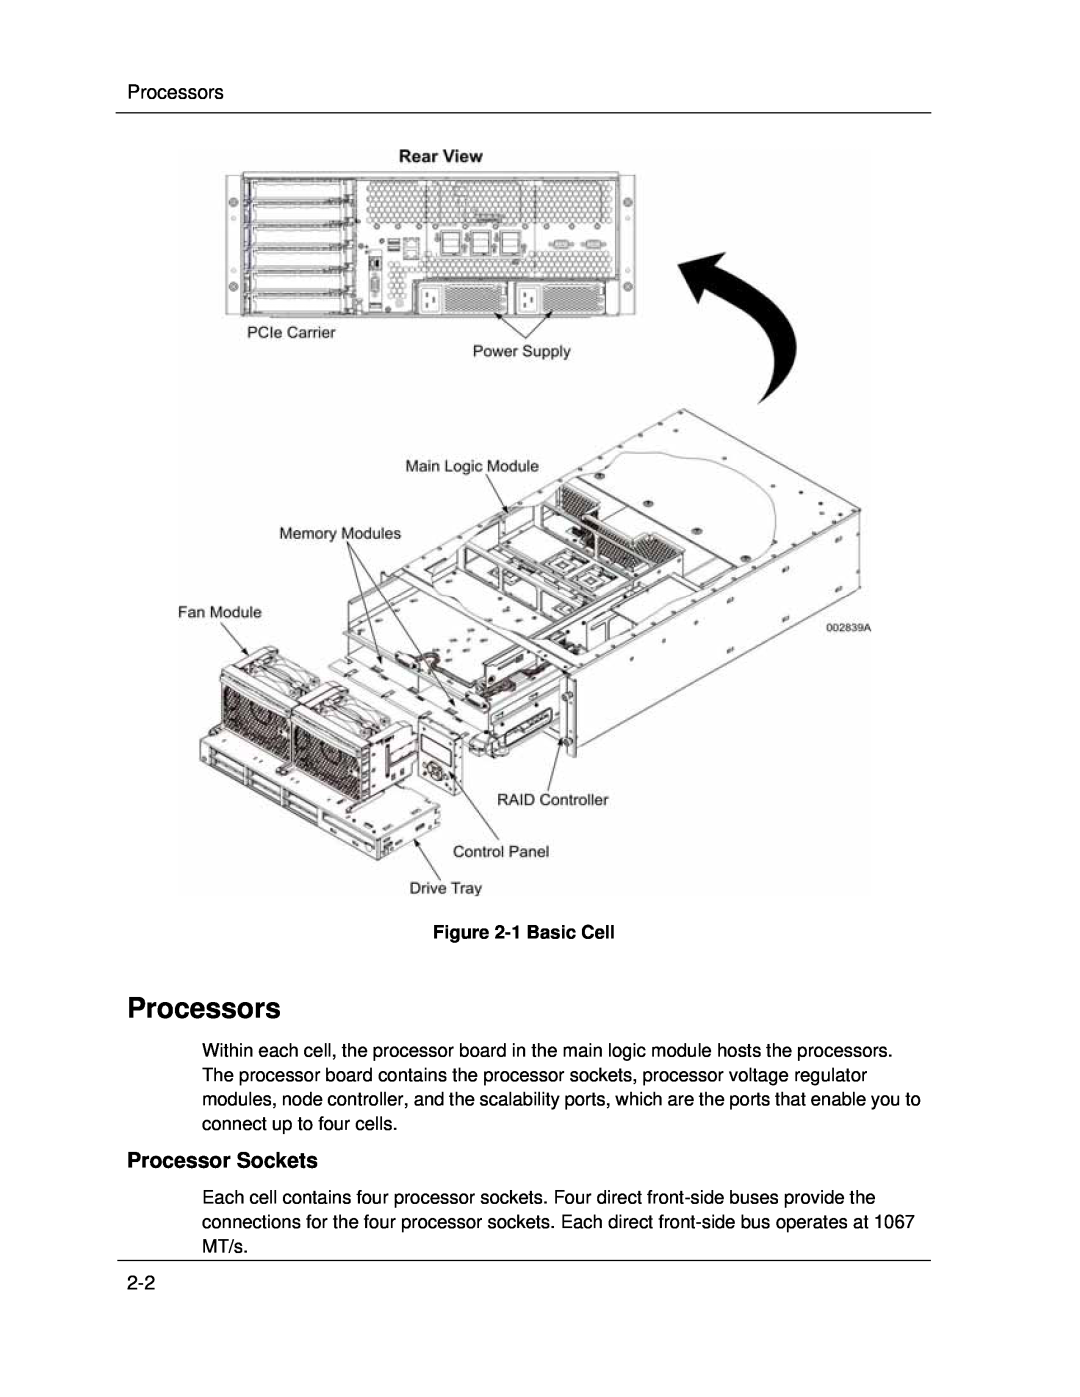 NEC A1160 manual Processors, Processor Sockets, 1Basic Cell 